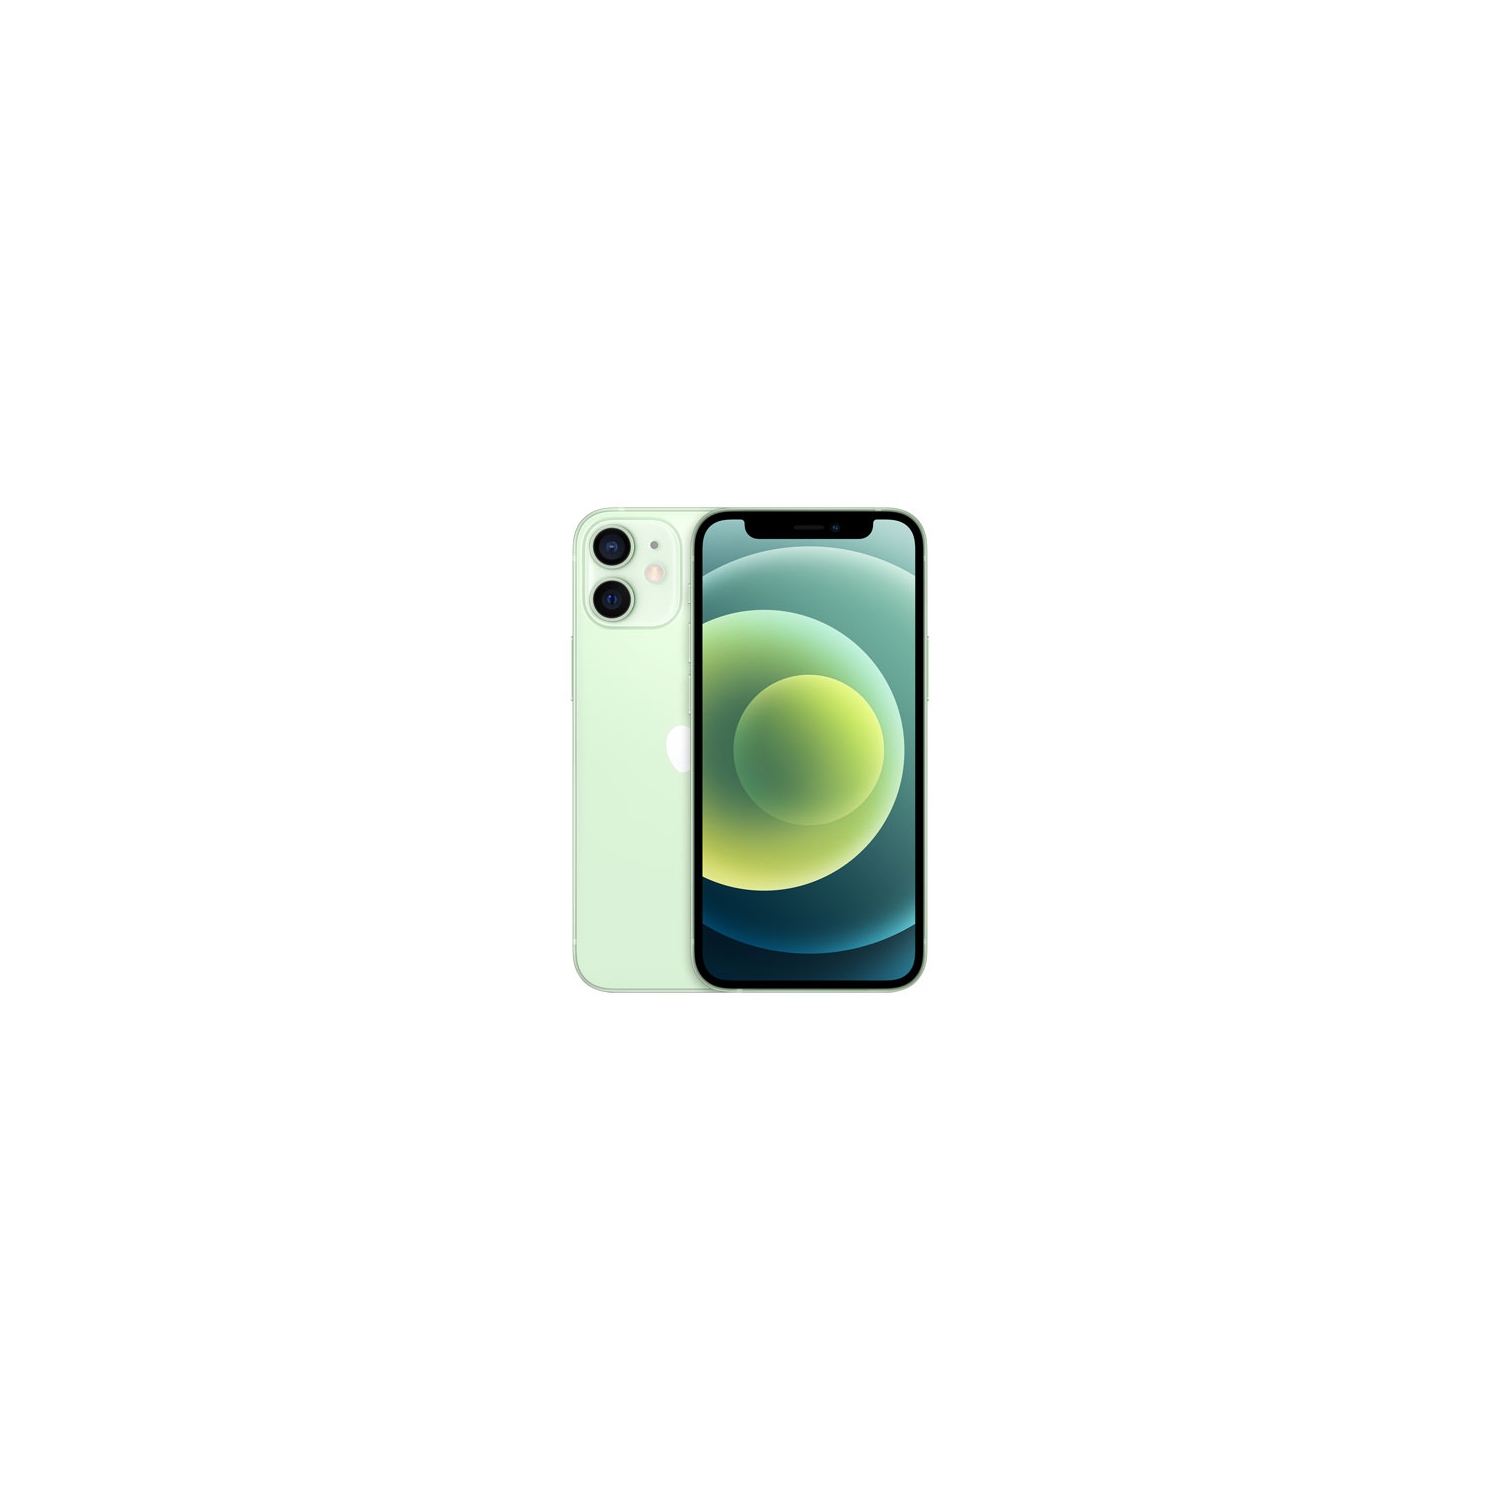 Refurbished (Good) - Apple iPhone 12 mini 128GB Smartphone - Green - Unlocked